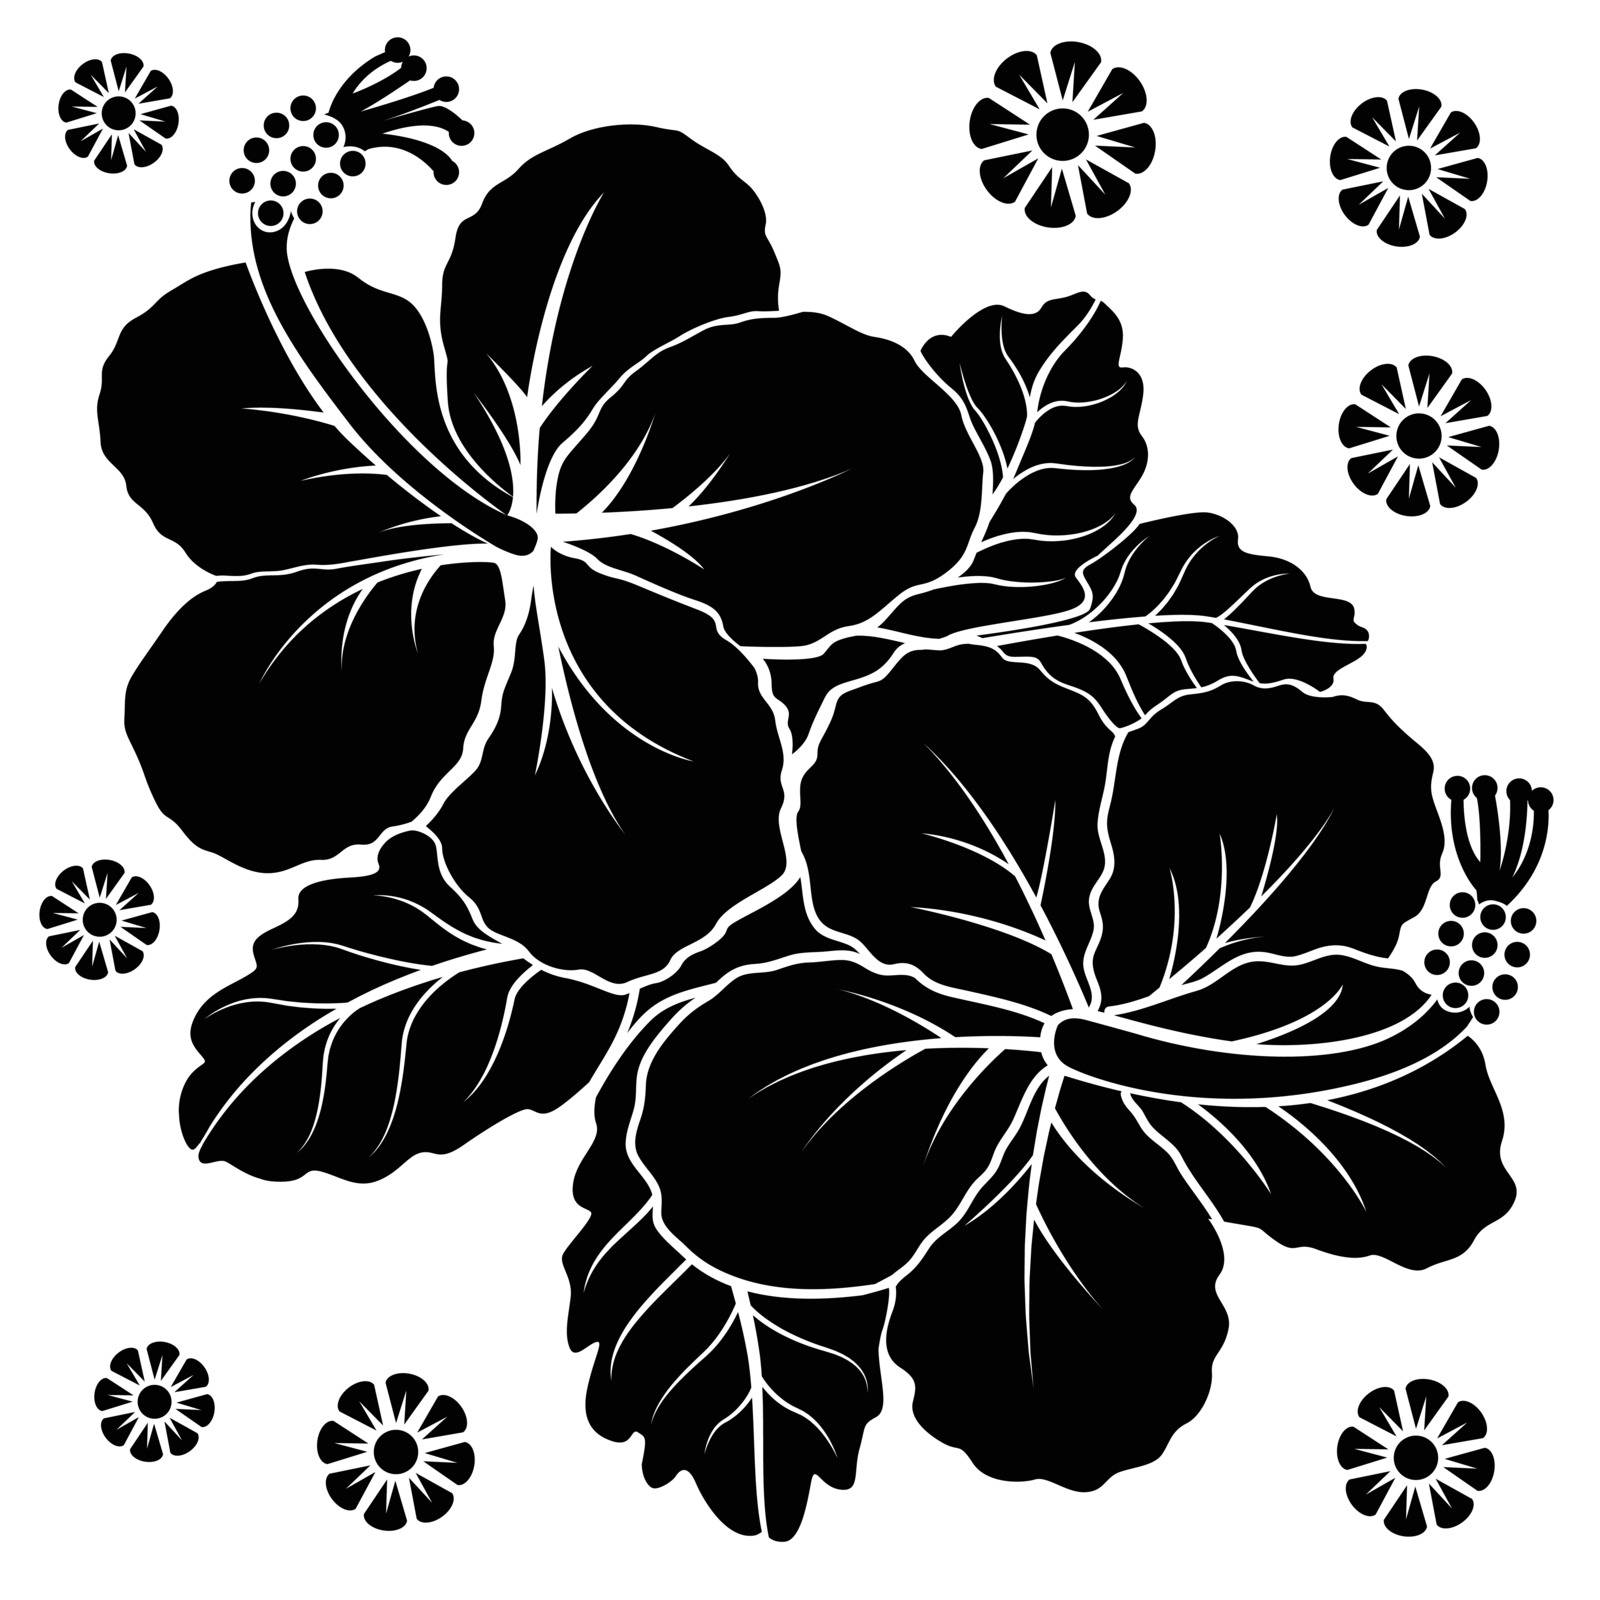 Black silhouette of flowers. Vector illustration.